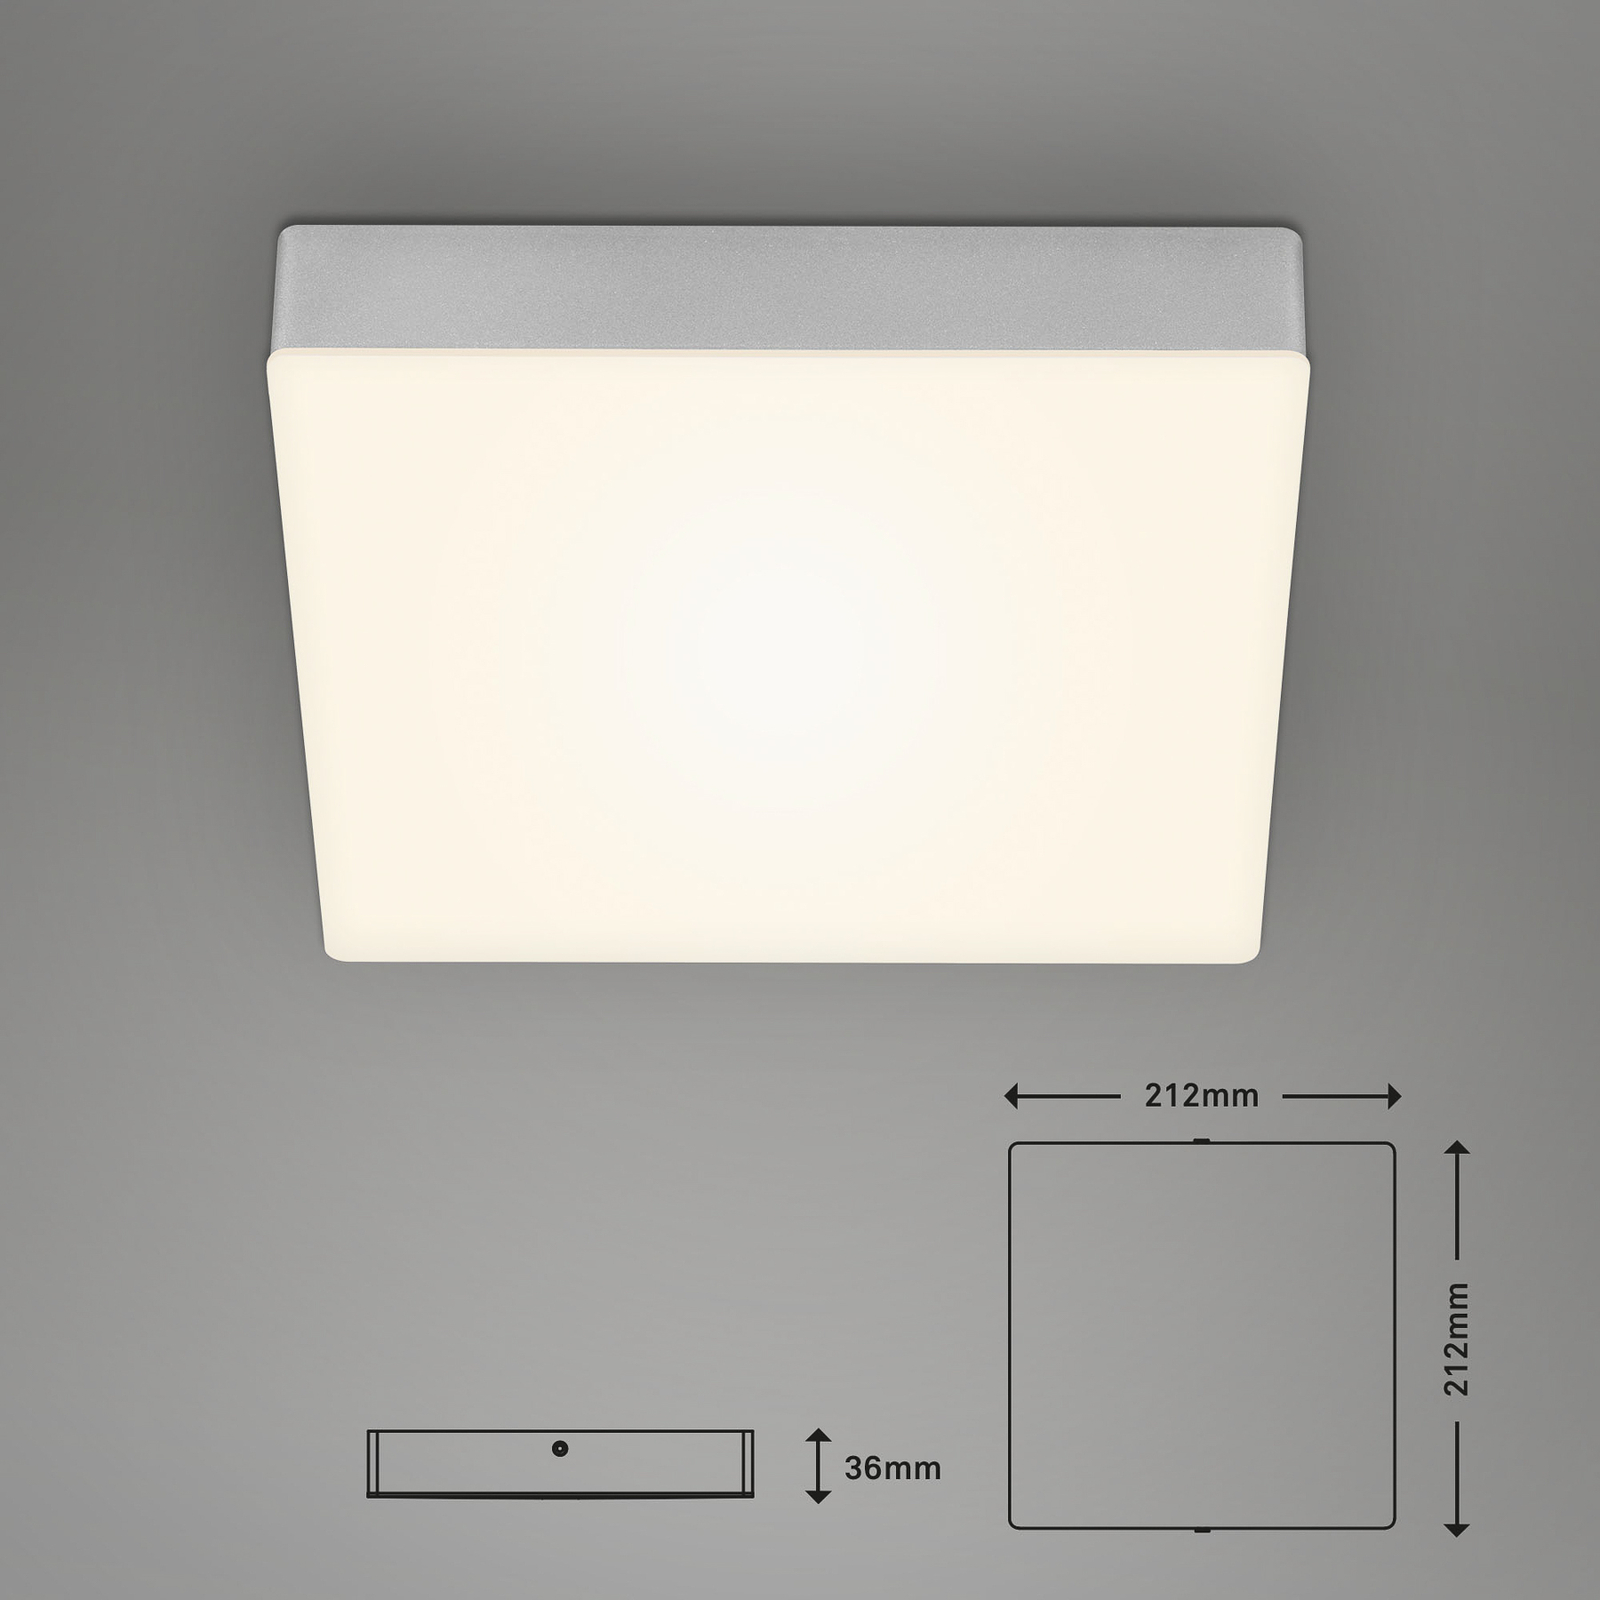 Plamen LED stropna svjetiljka, 21,2 x 21,2 cm, srebrna